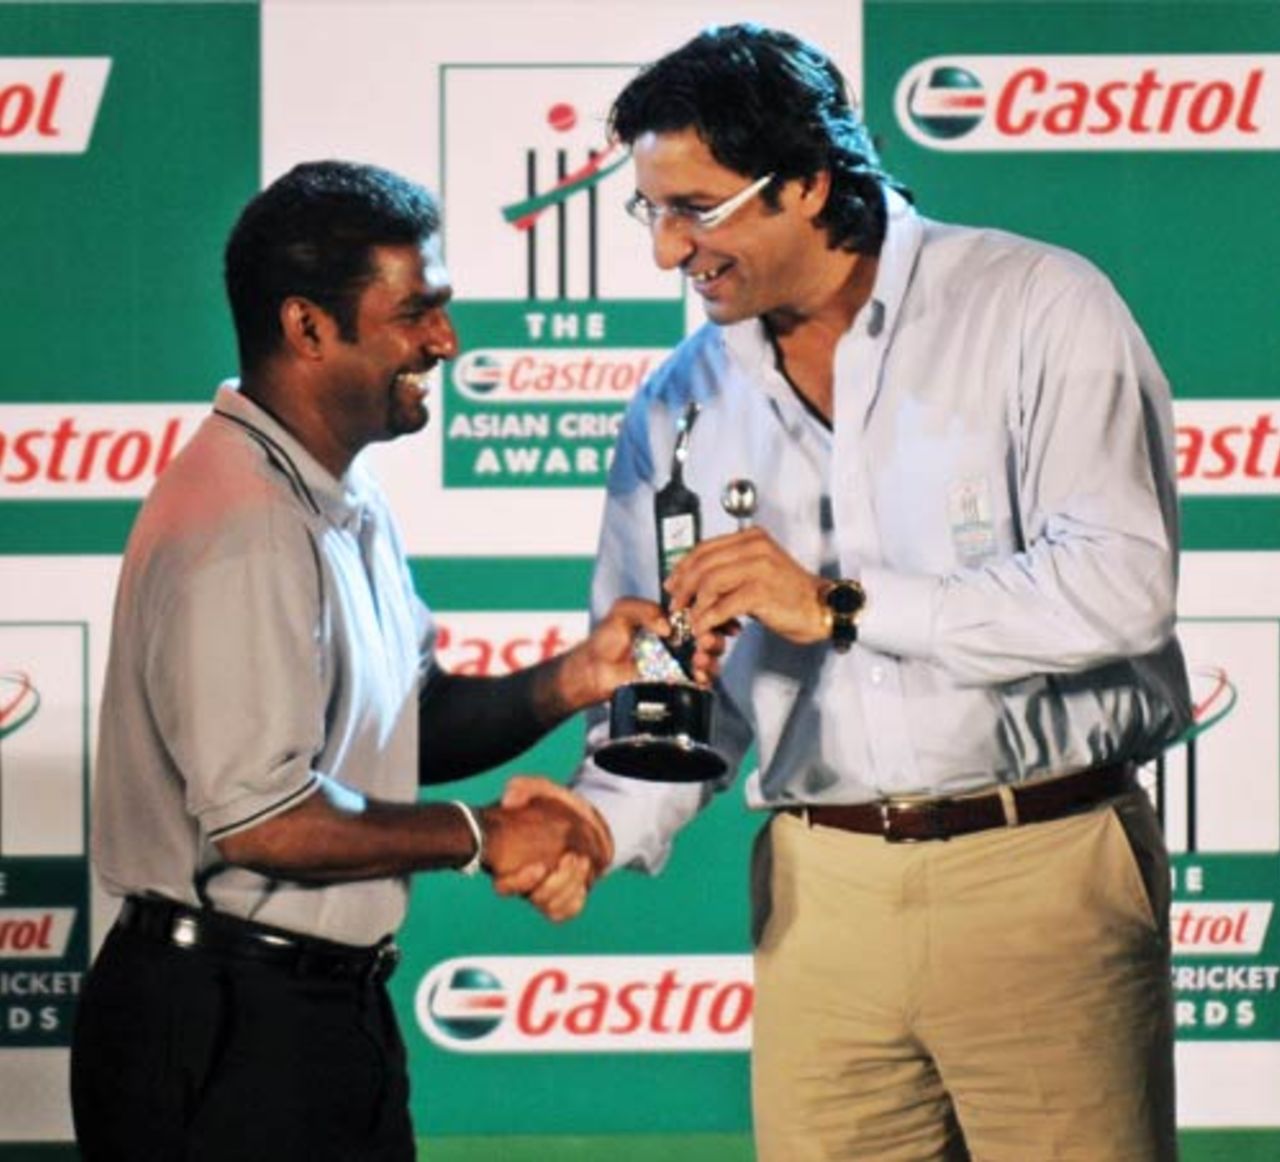 Muttiah Muralitharan accepts the best Asian Test bowler in 2007 award from Wasim Akram, Castrol Asian cricket awards, Karachi, June 27, 2008 